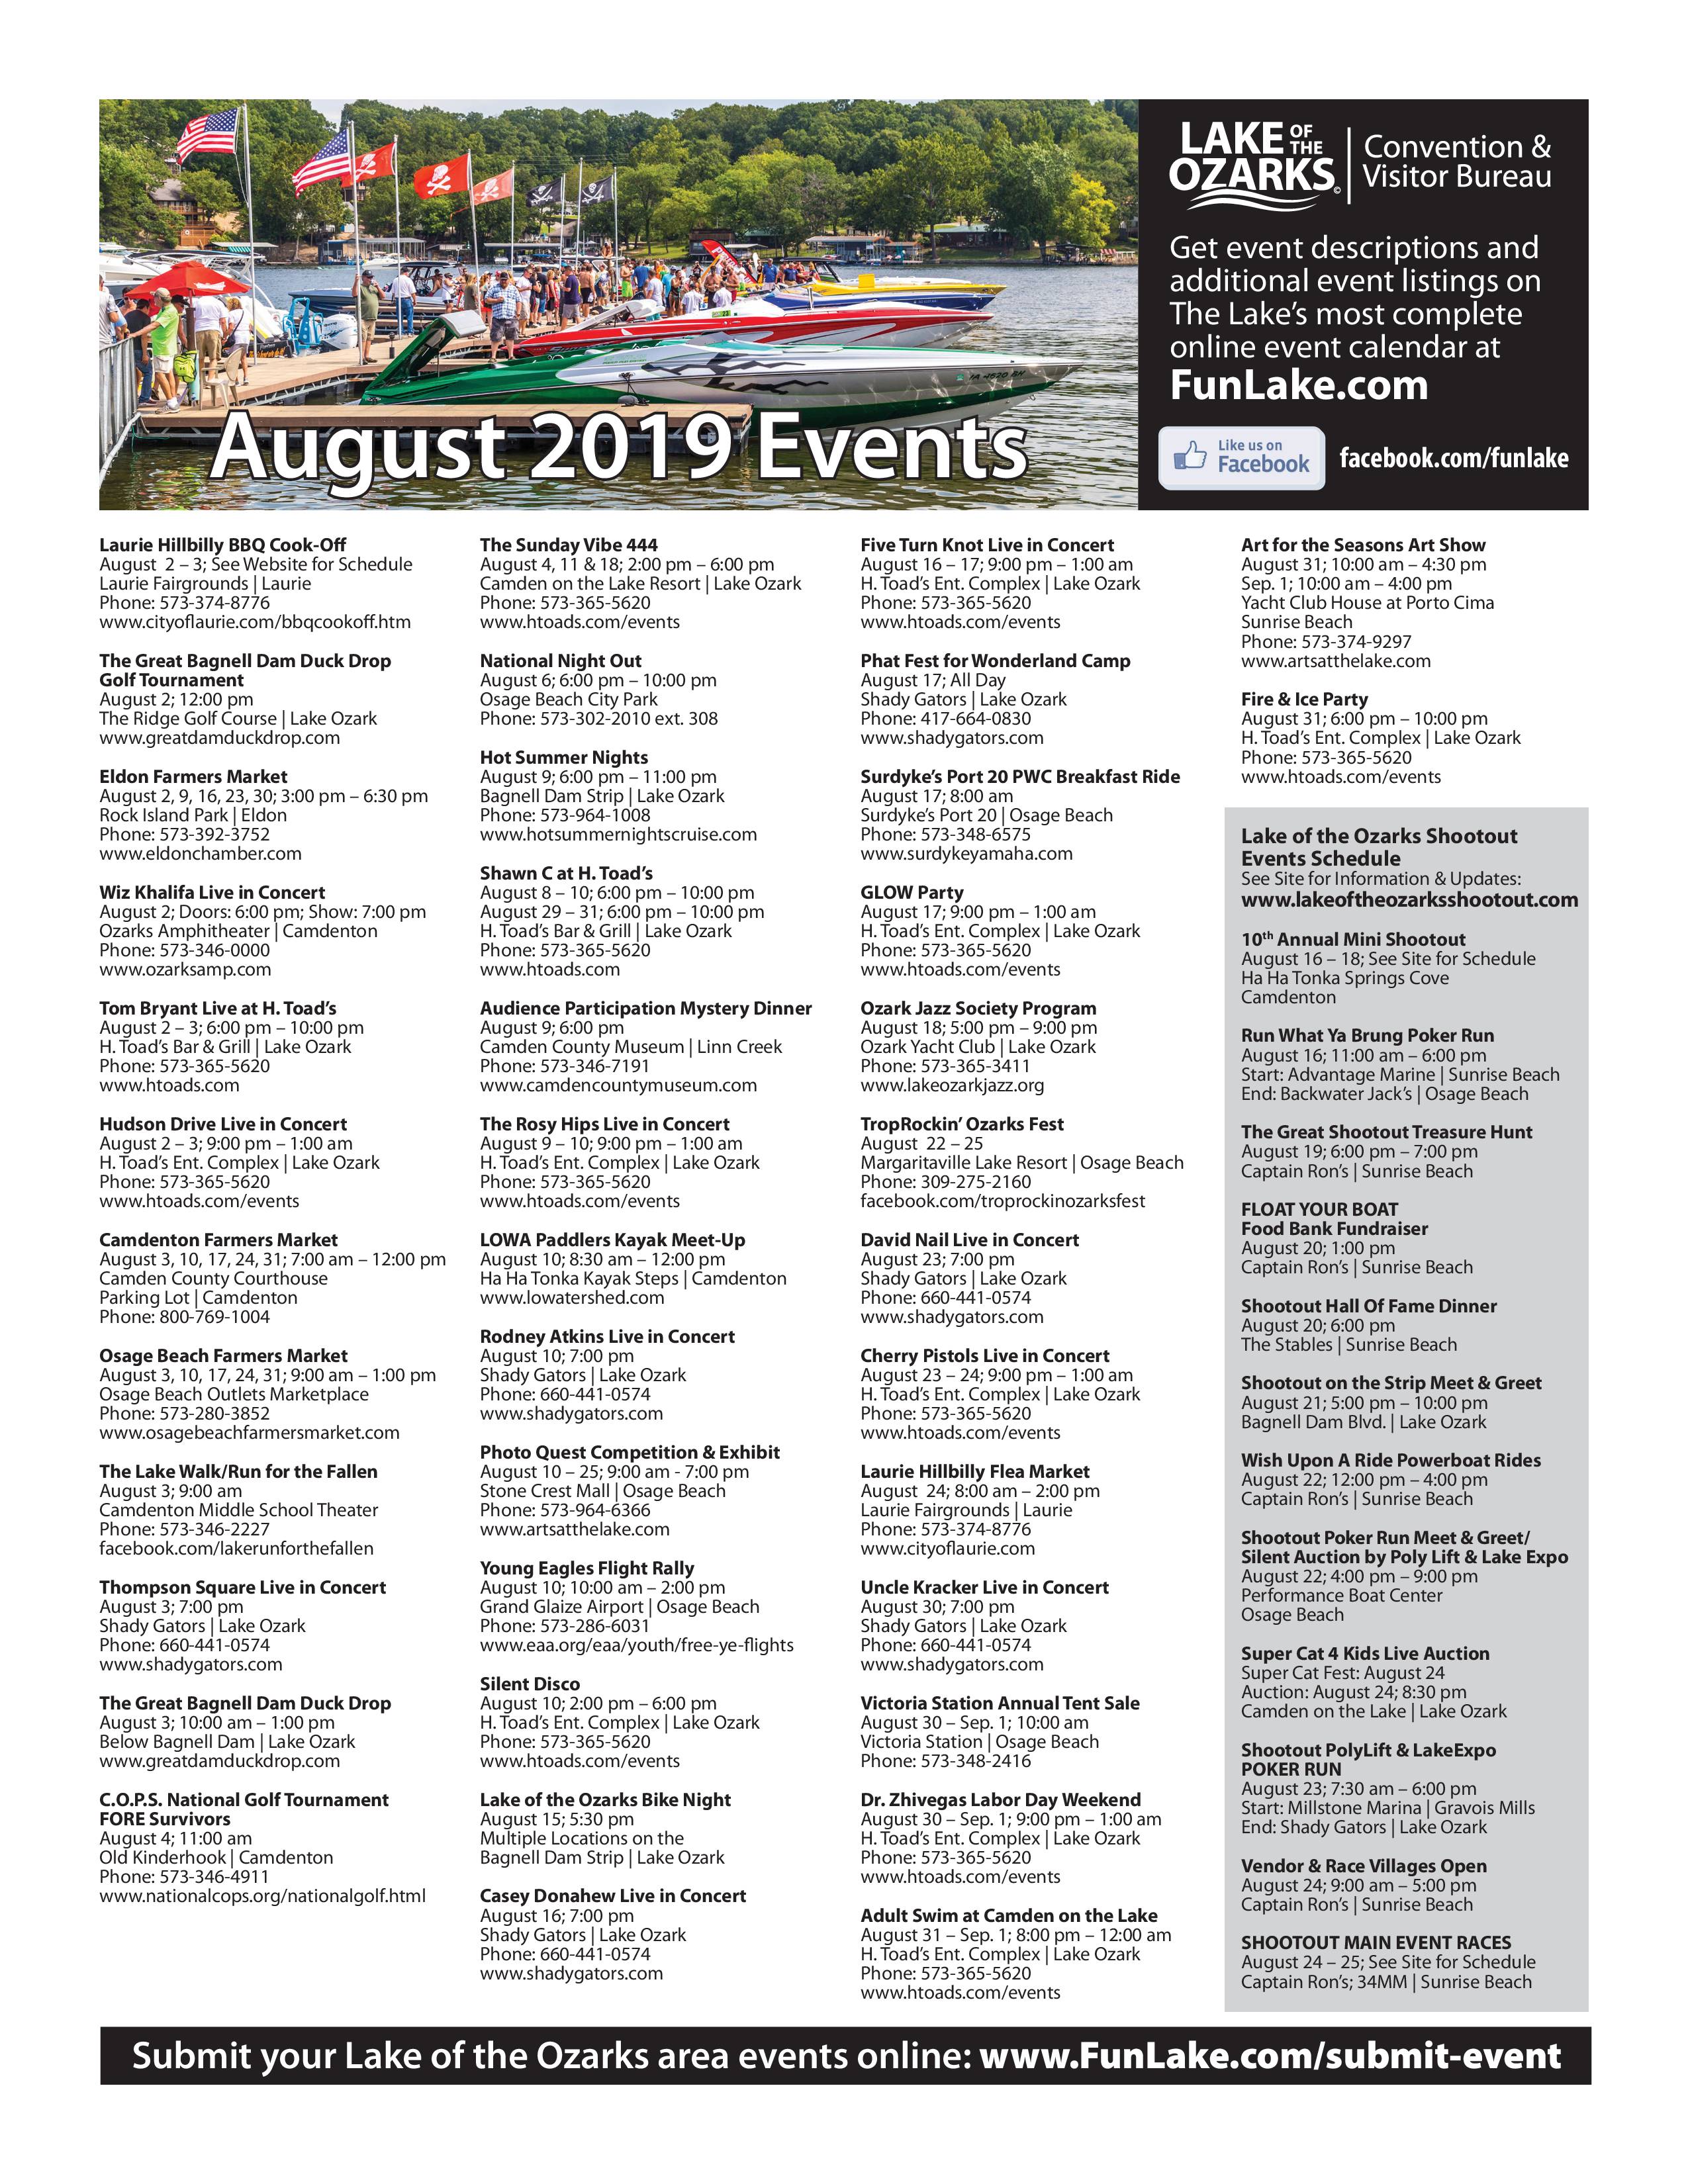 Aug 2019 Lake of the Ozarks Events Calendar